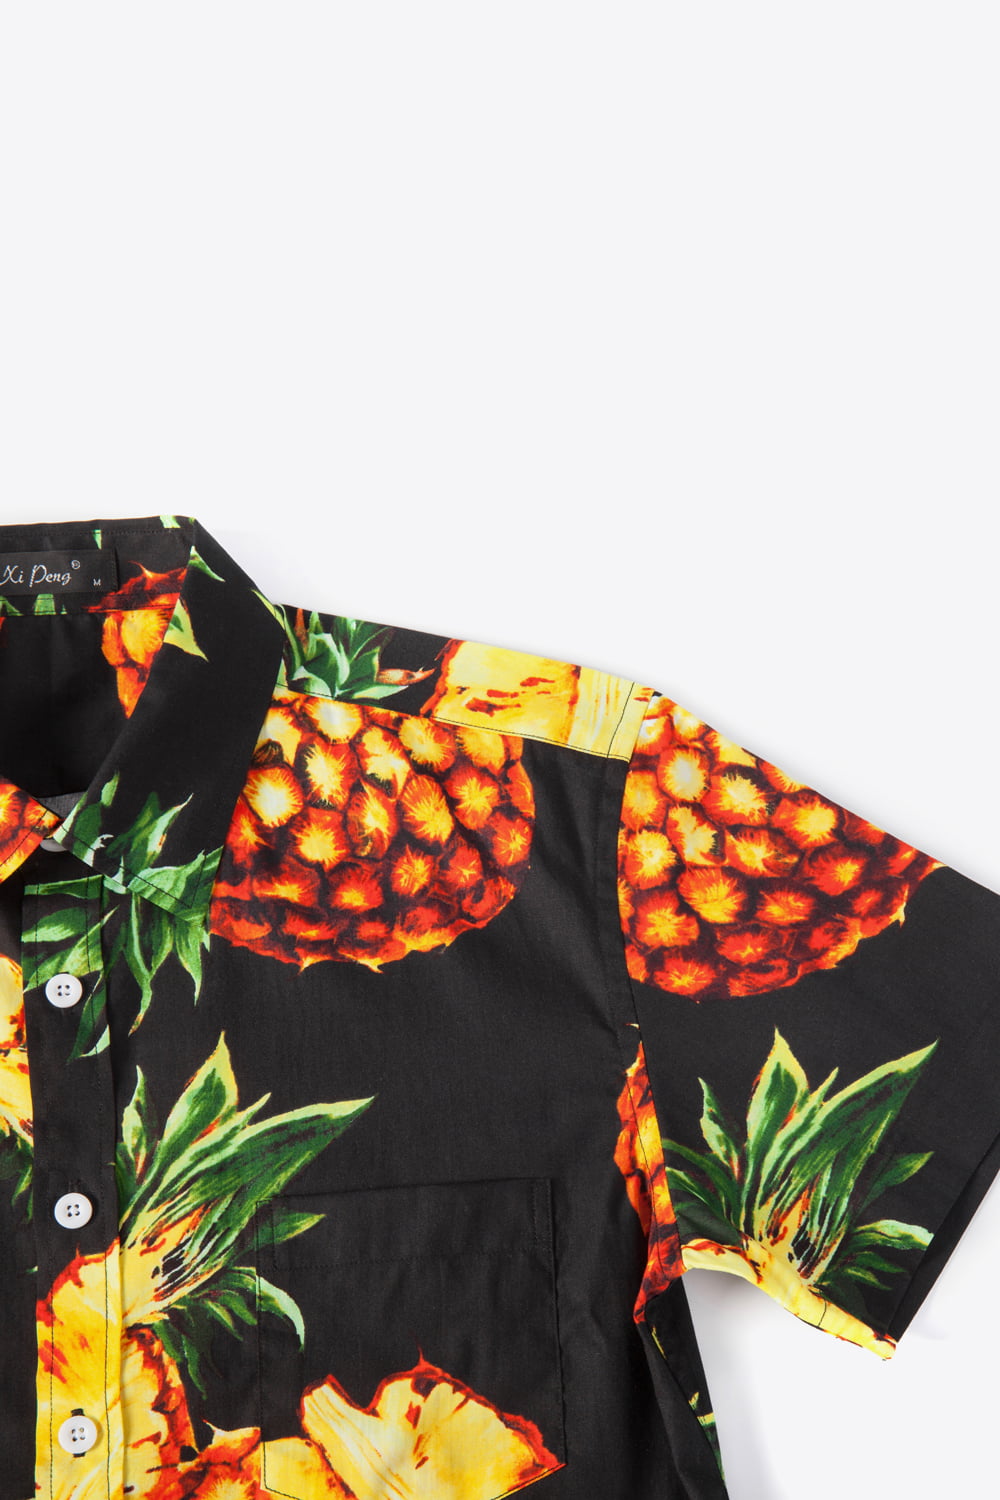 Pineapple Print Collared Short Sleeve Beach Shirt